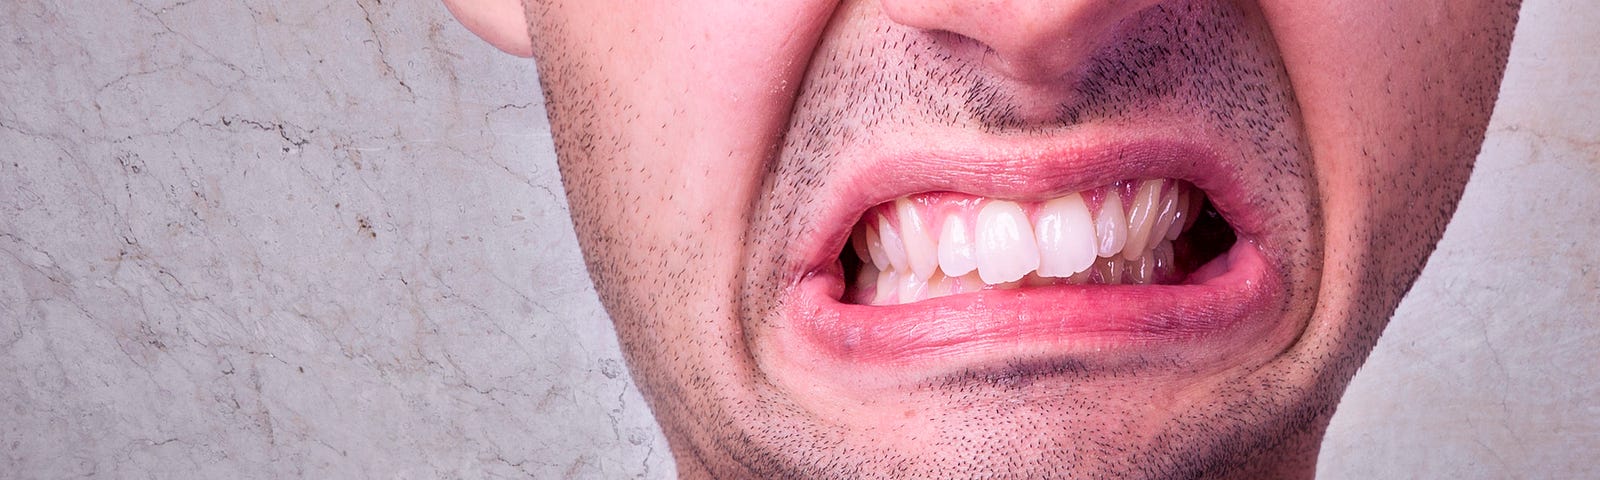 man gritting his teeth